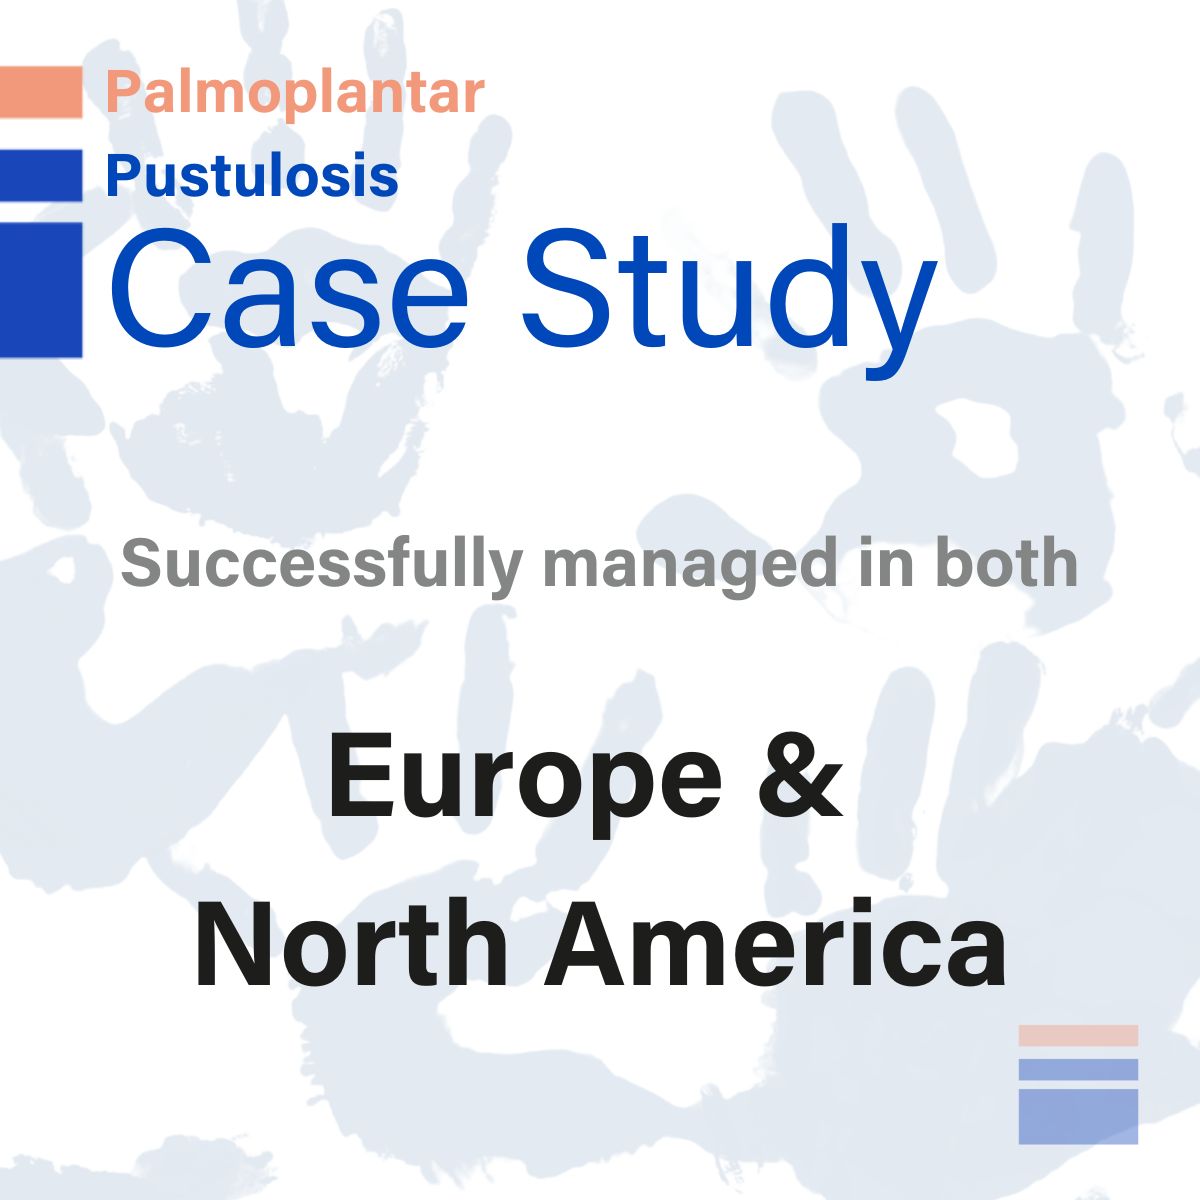 Palmoplantar Pustulosis (PPP) Case Study